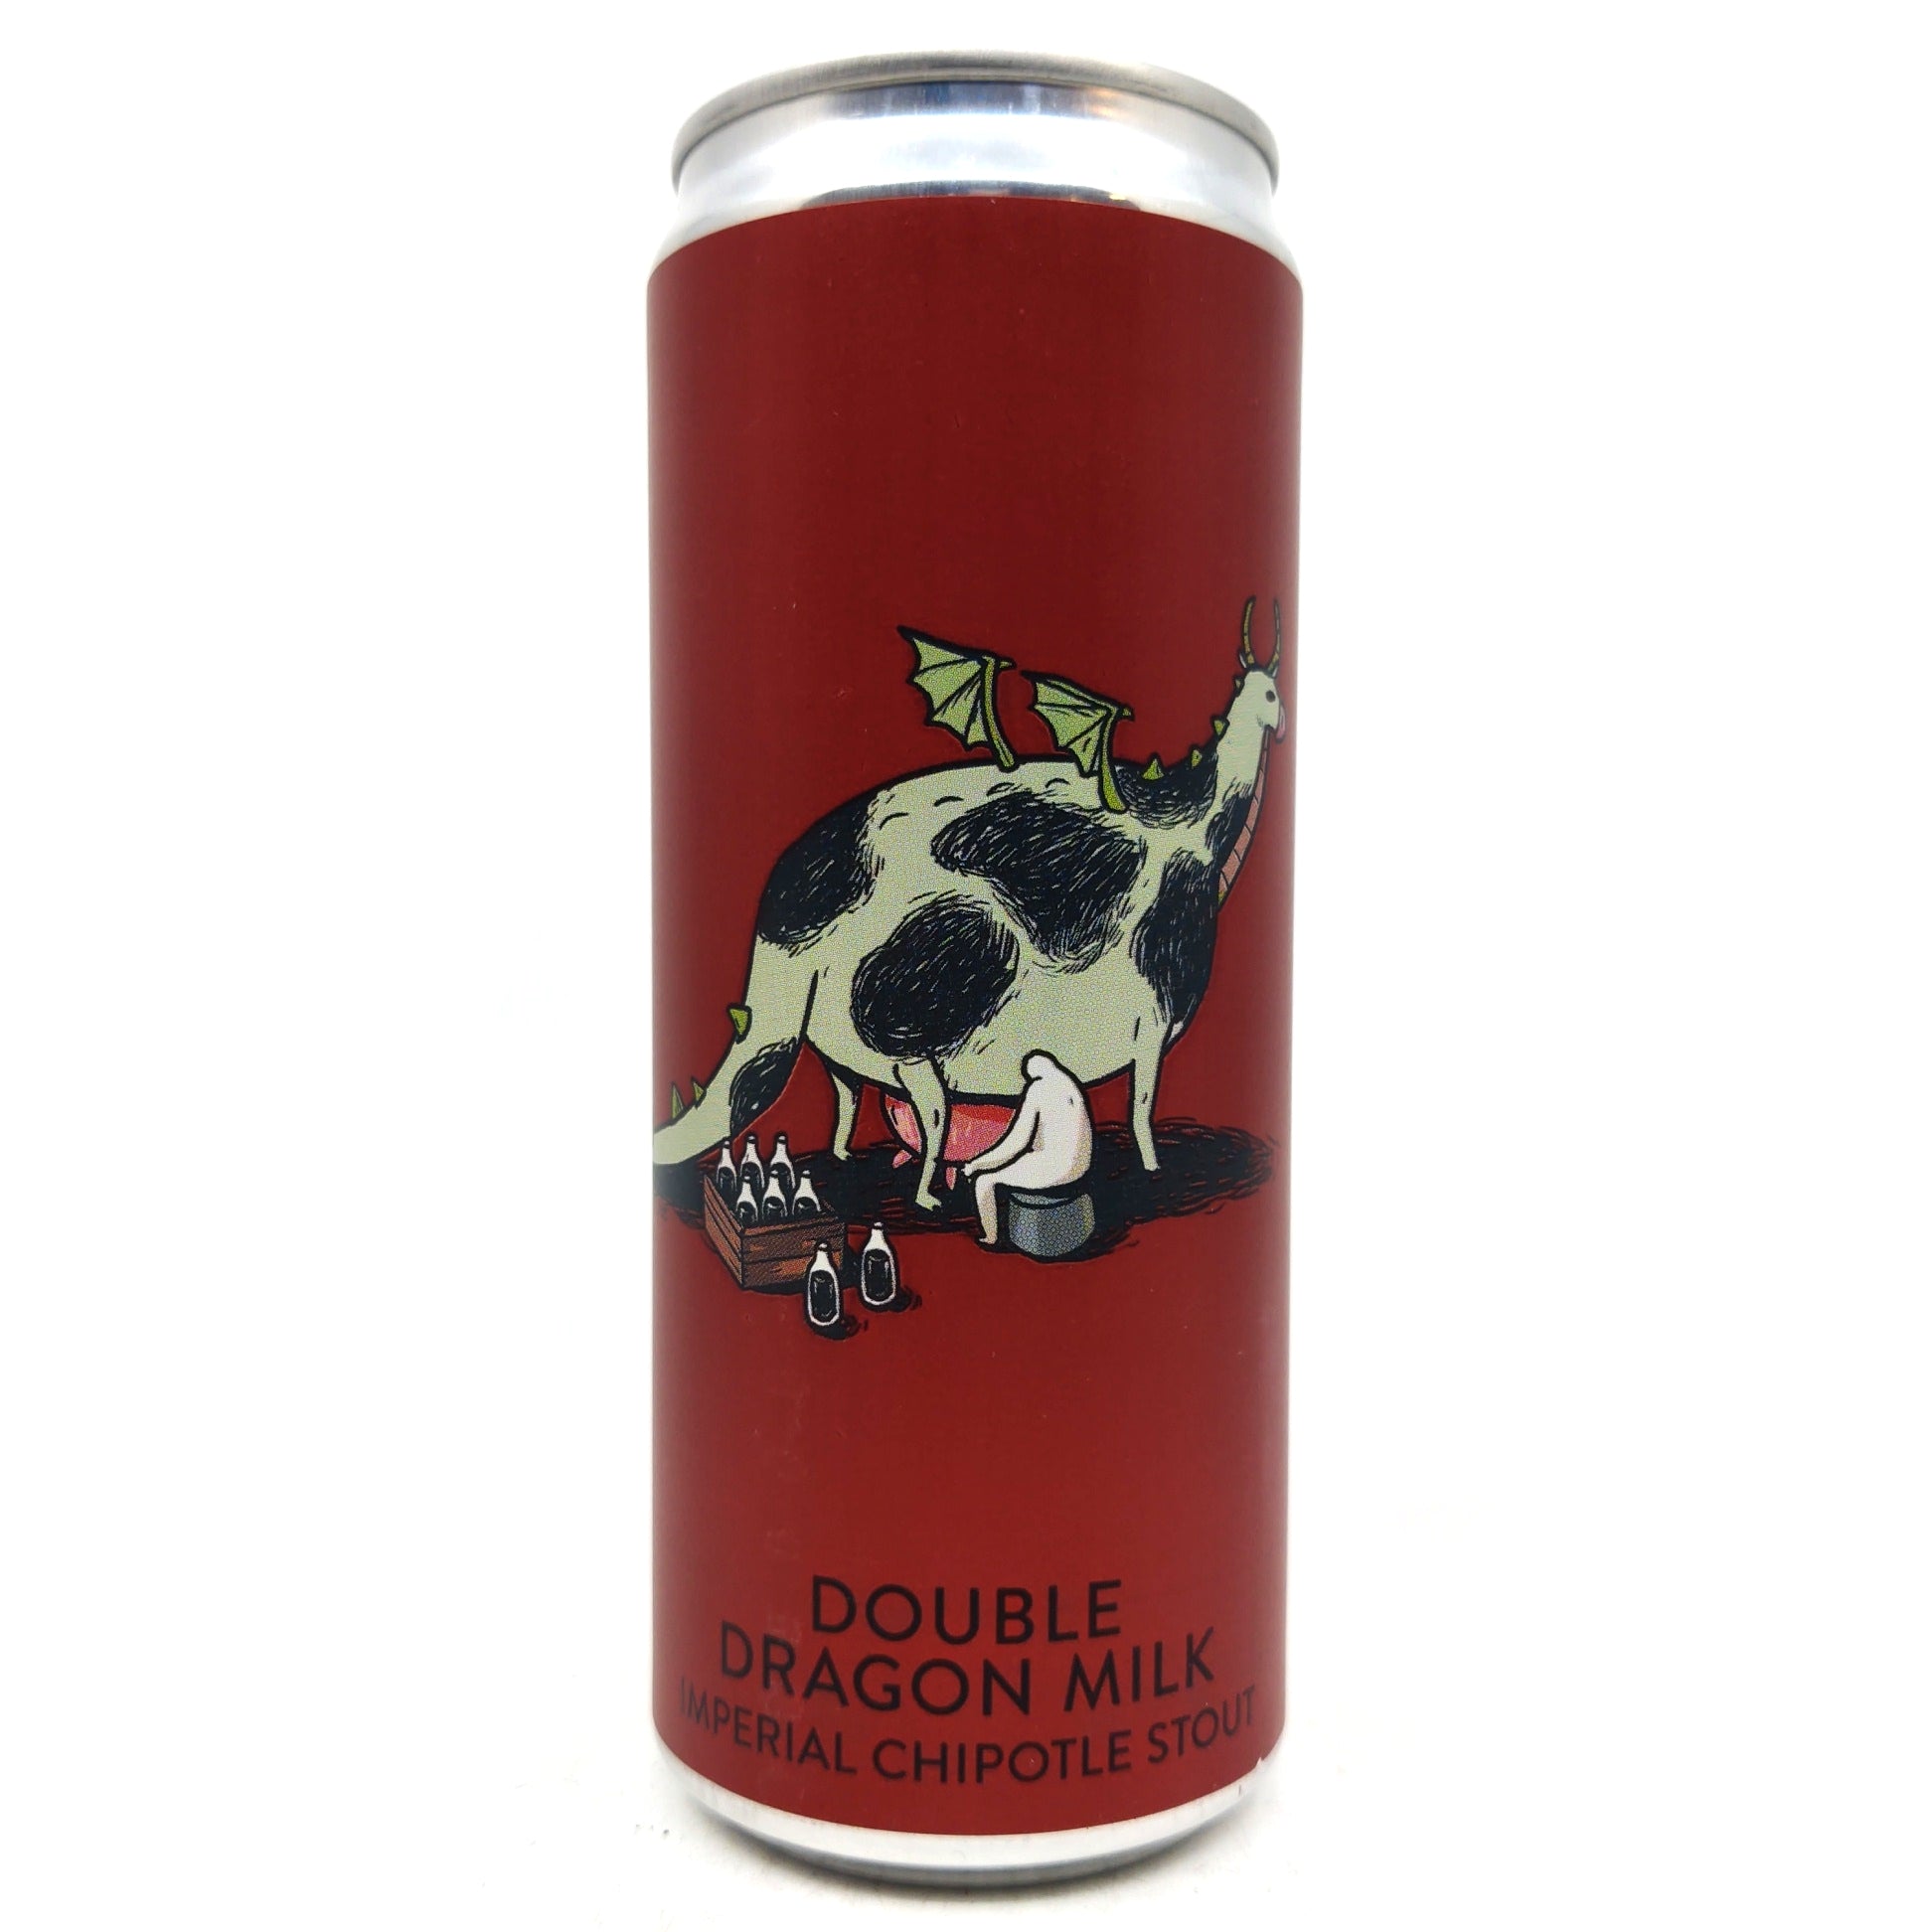 Varvar Brew Double Dragon Milk Imperial Chipotle Stout 8.3% (330ml can)-Hop Burns & Black